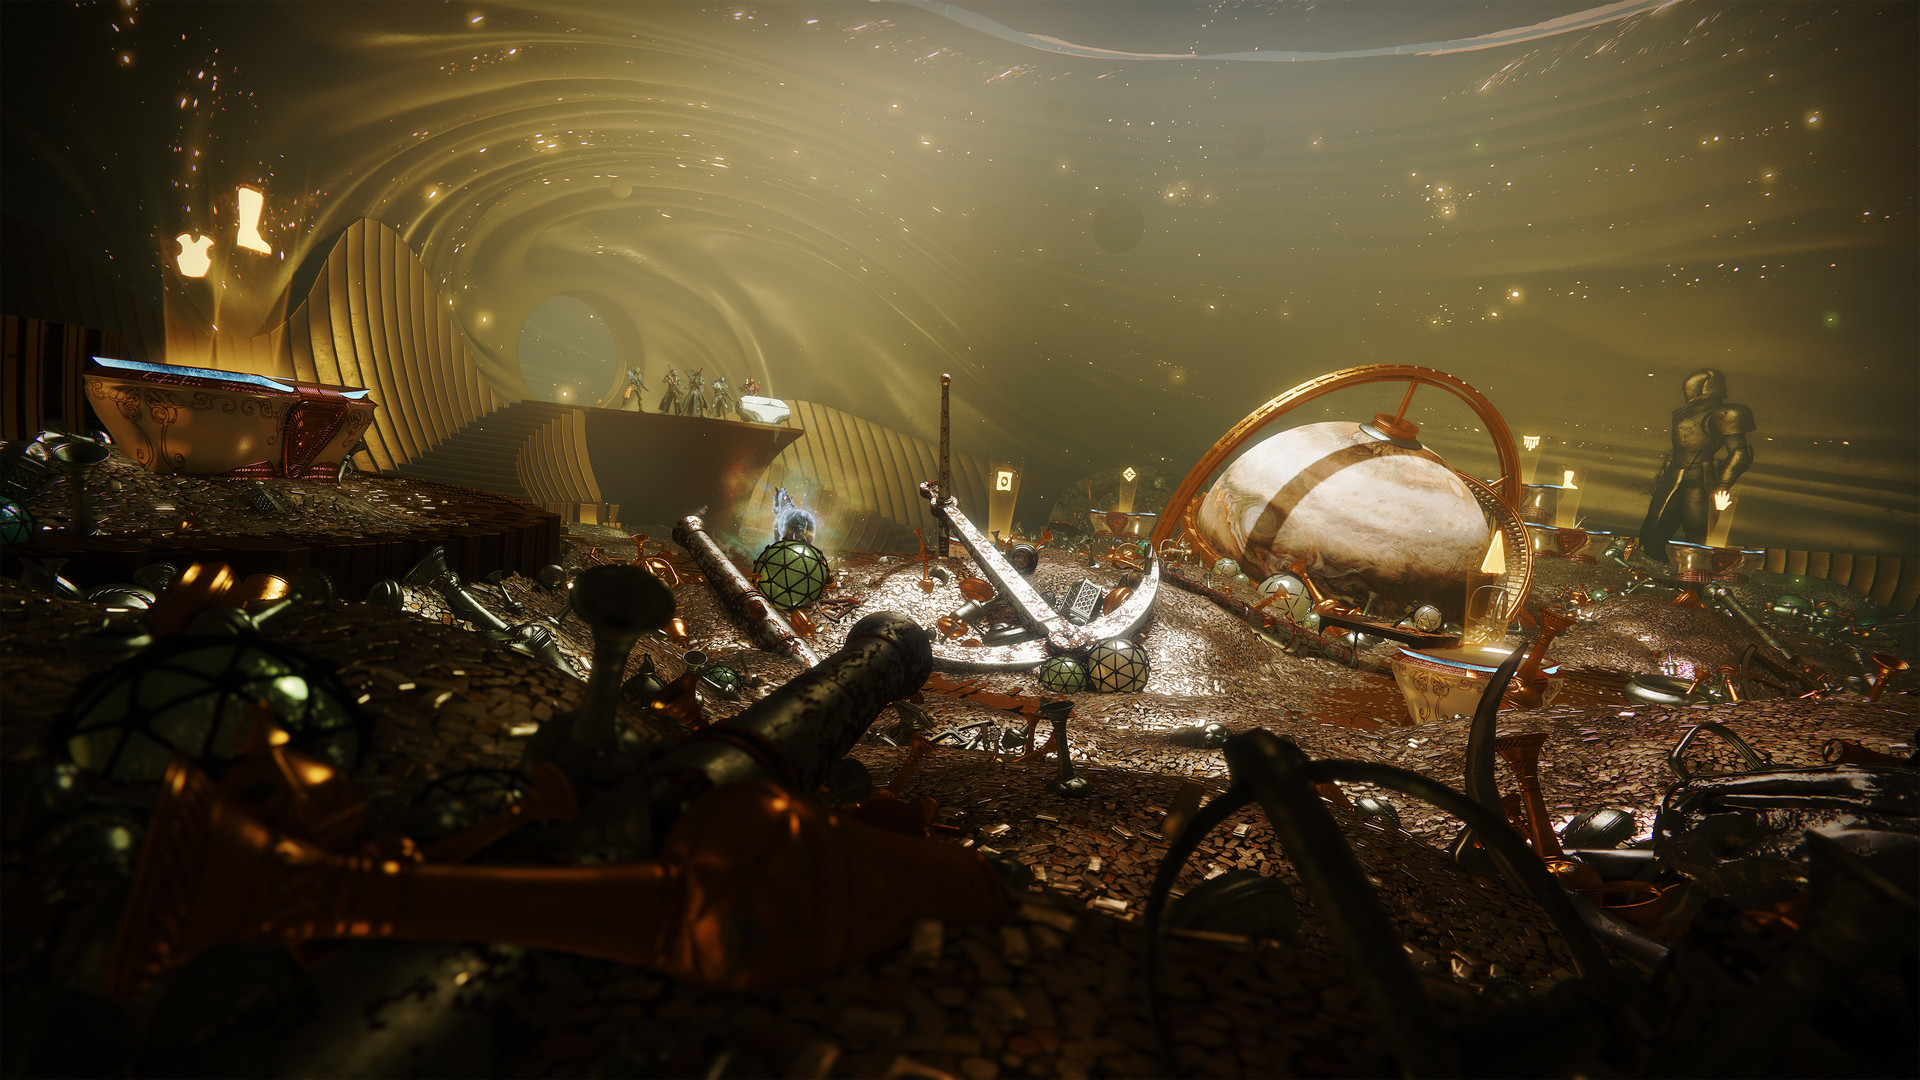 guardians inside a treasure chamber